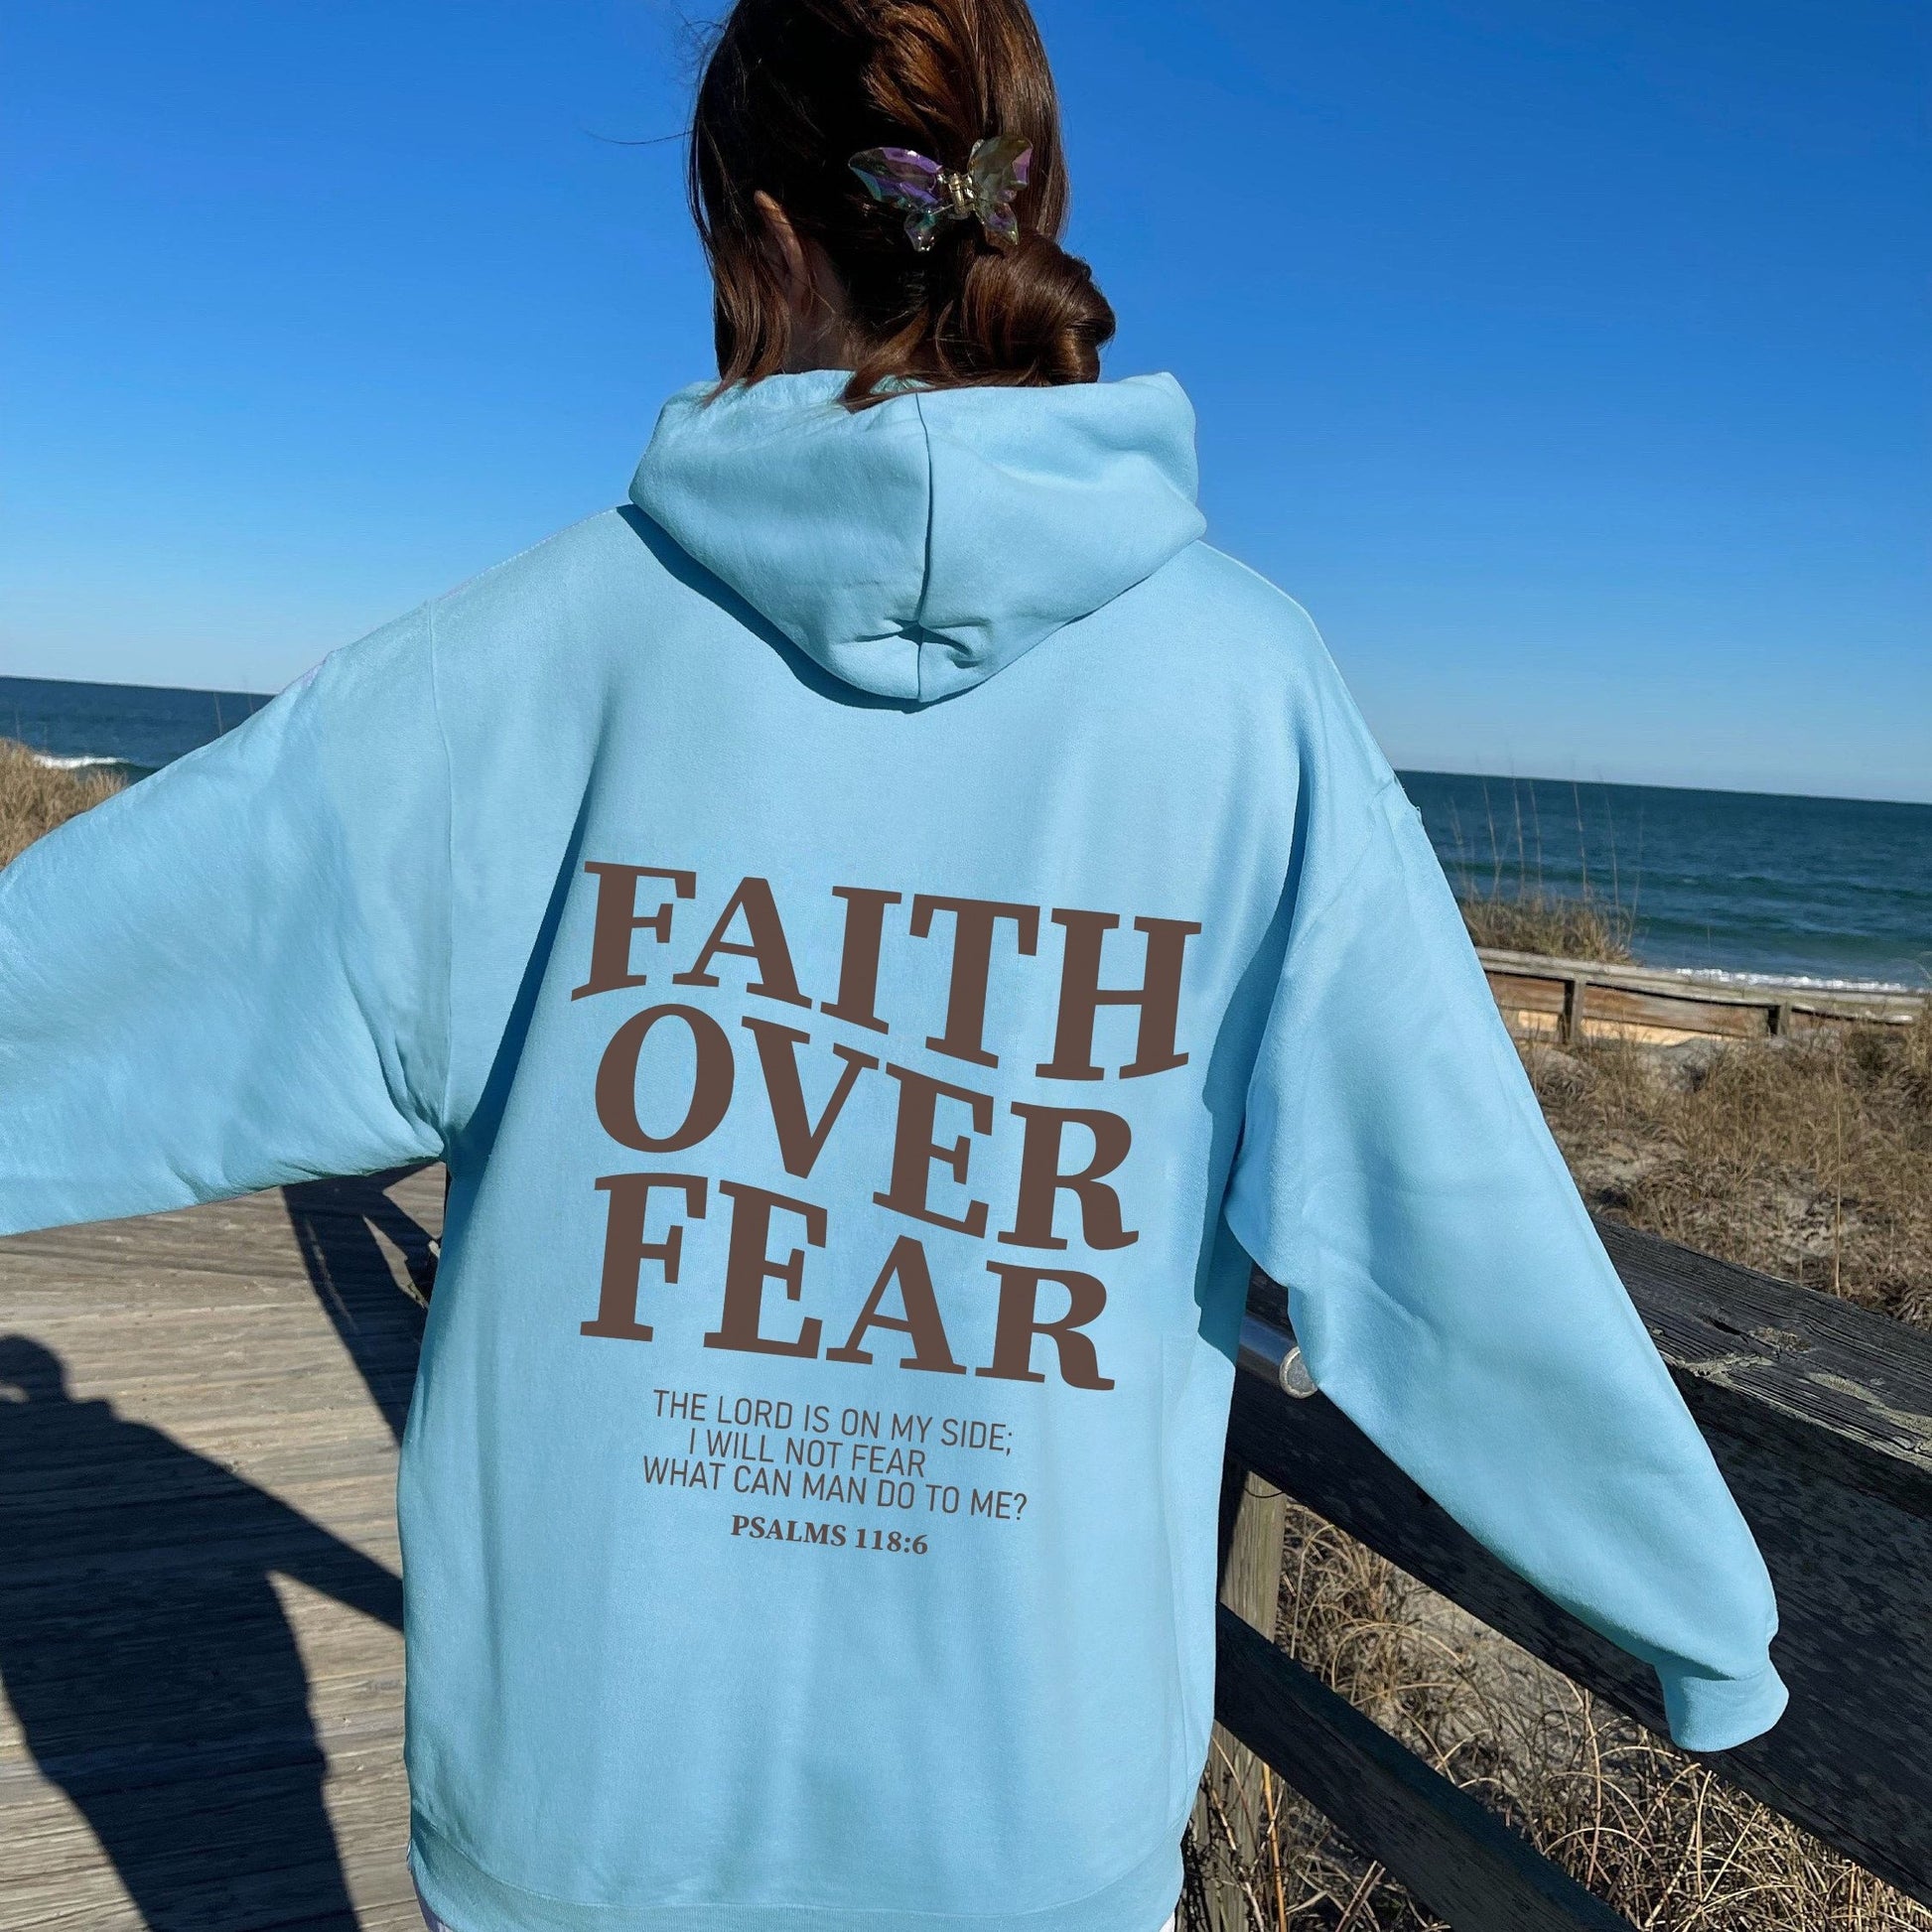 PSALMS 118:16 Faith Over Fear Women's Christian Pullover Hooded Sweatshirt claimedbygoddesigns